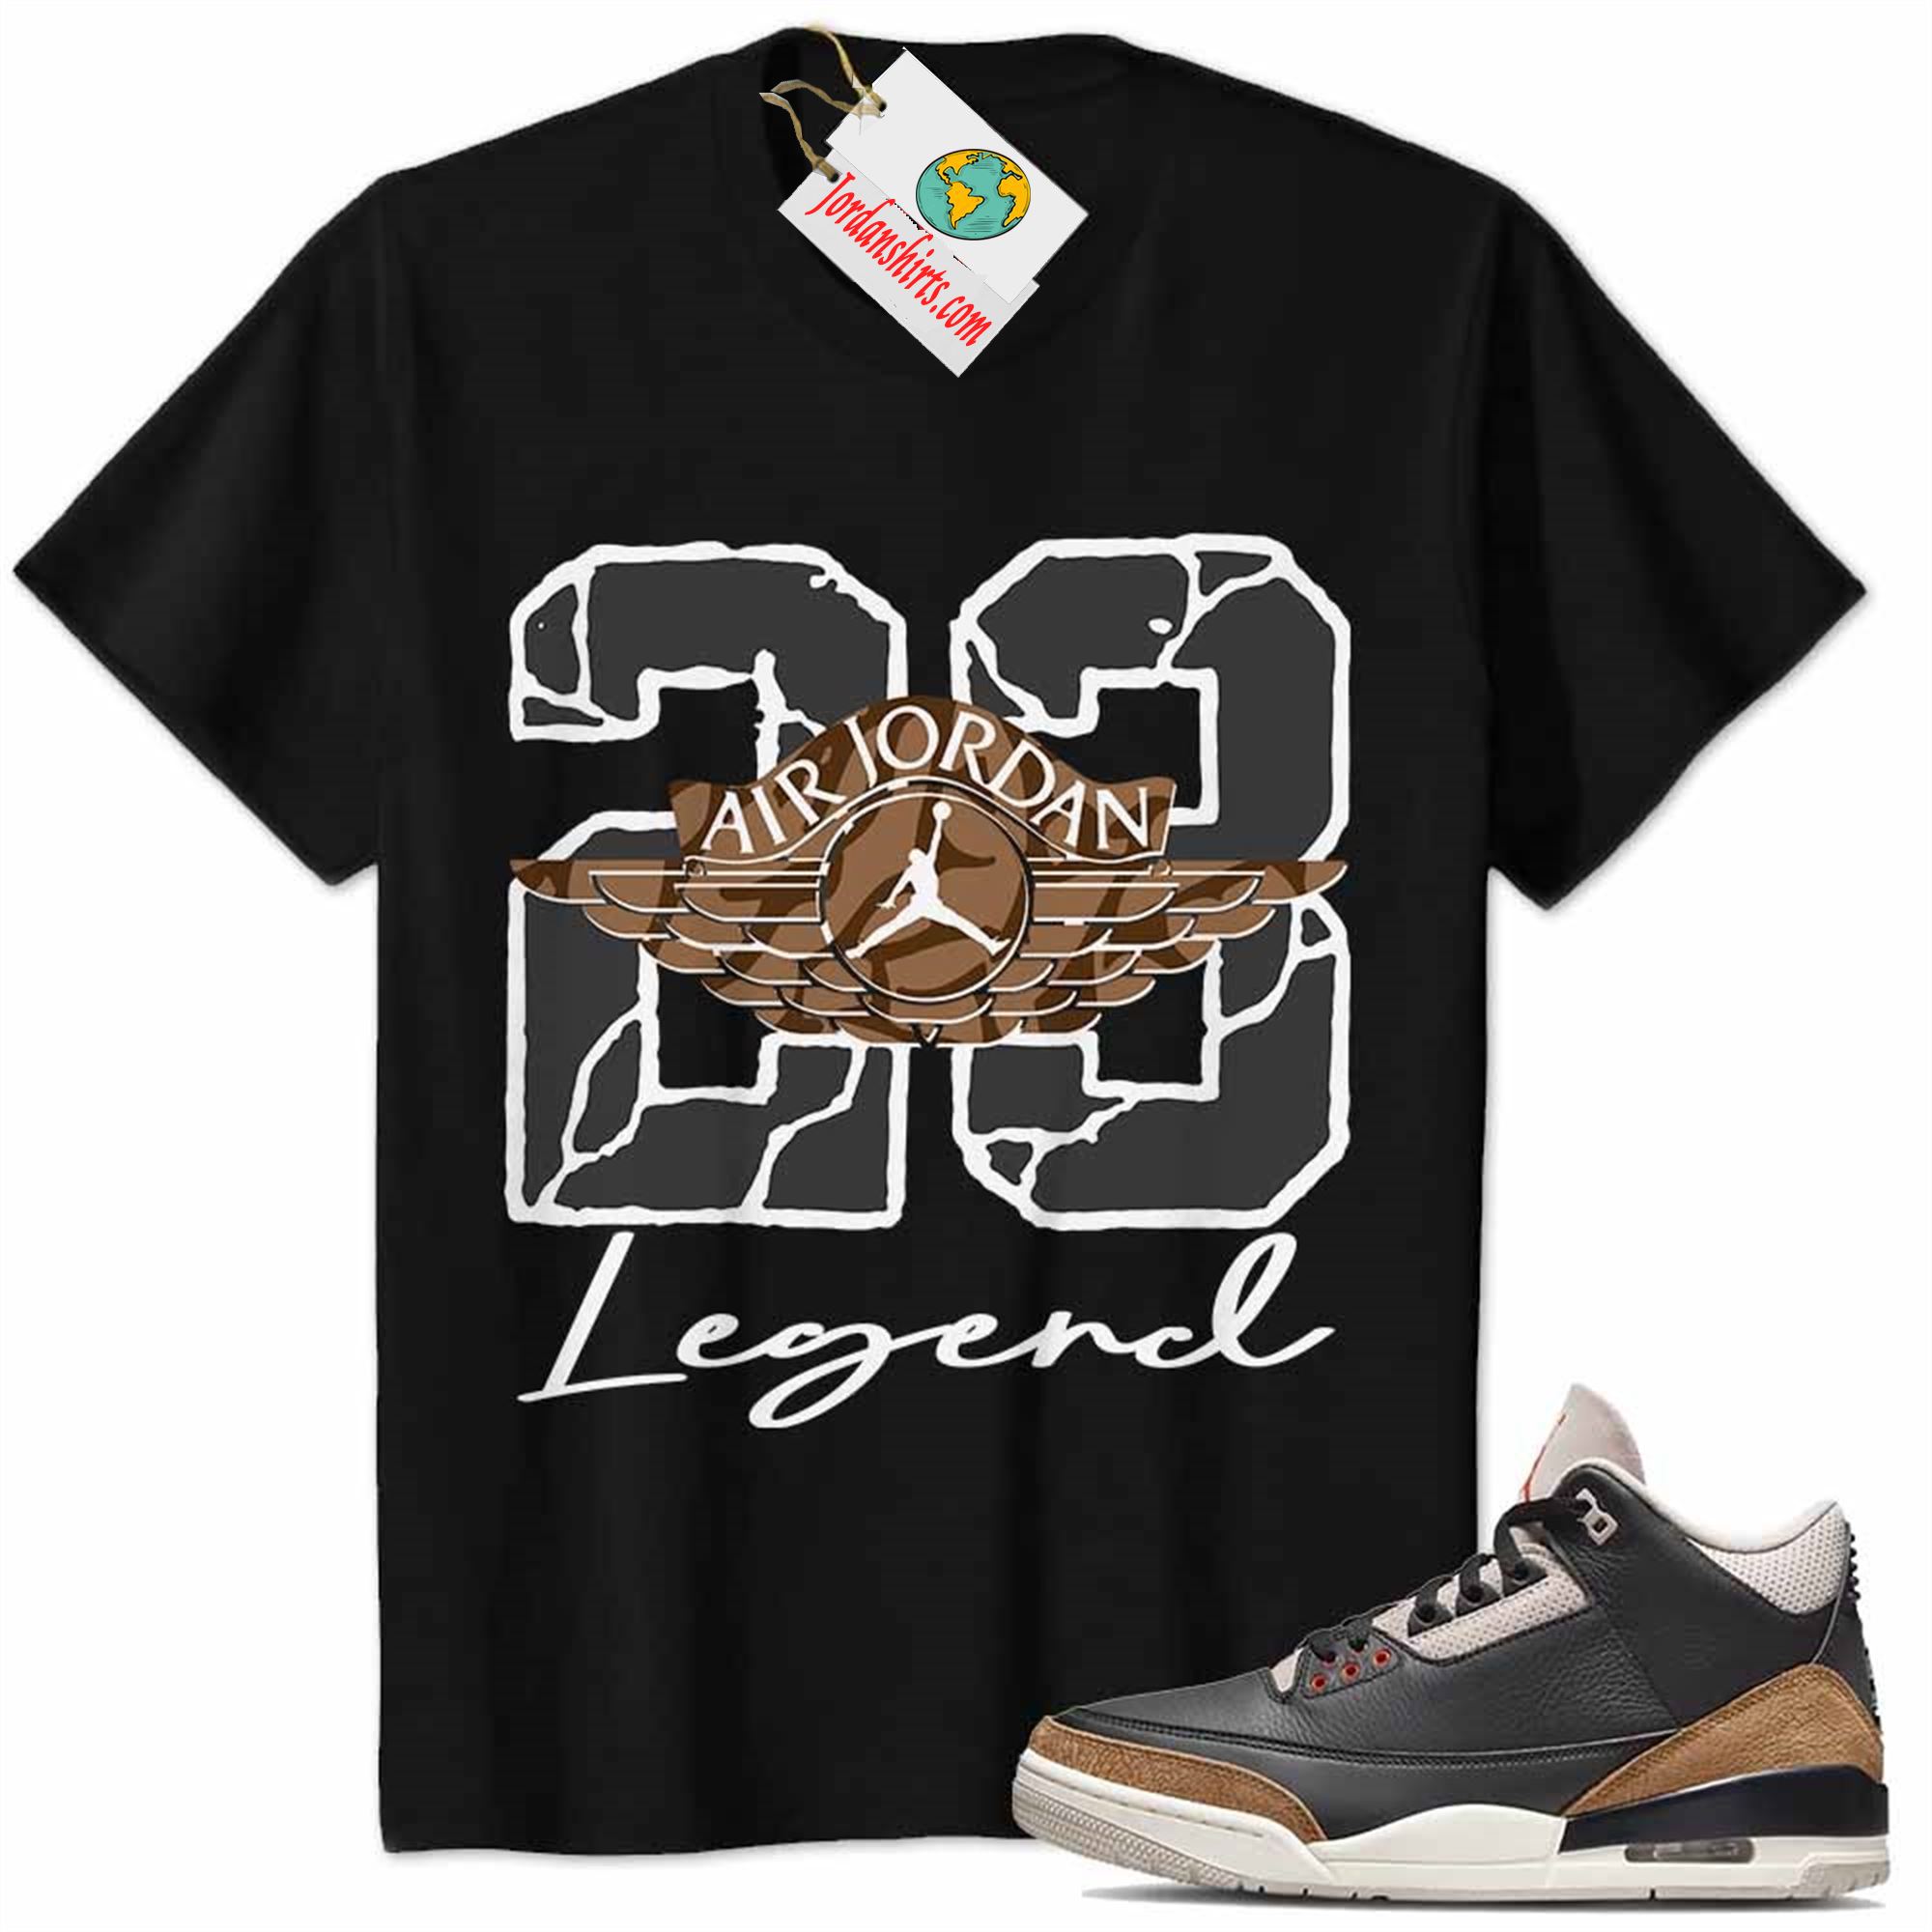 Jordan 3 Shirt, Jordan 3 Desert Elephant Shirt Shirt 23 Jordan Number Legend Black Plus Size Up To 5xl